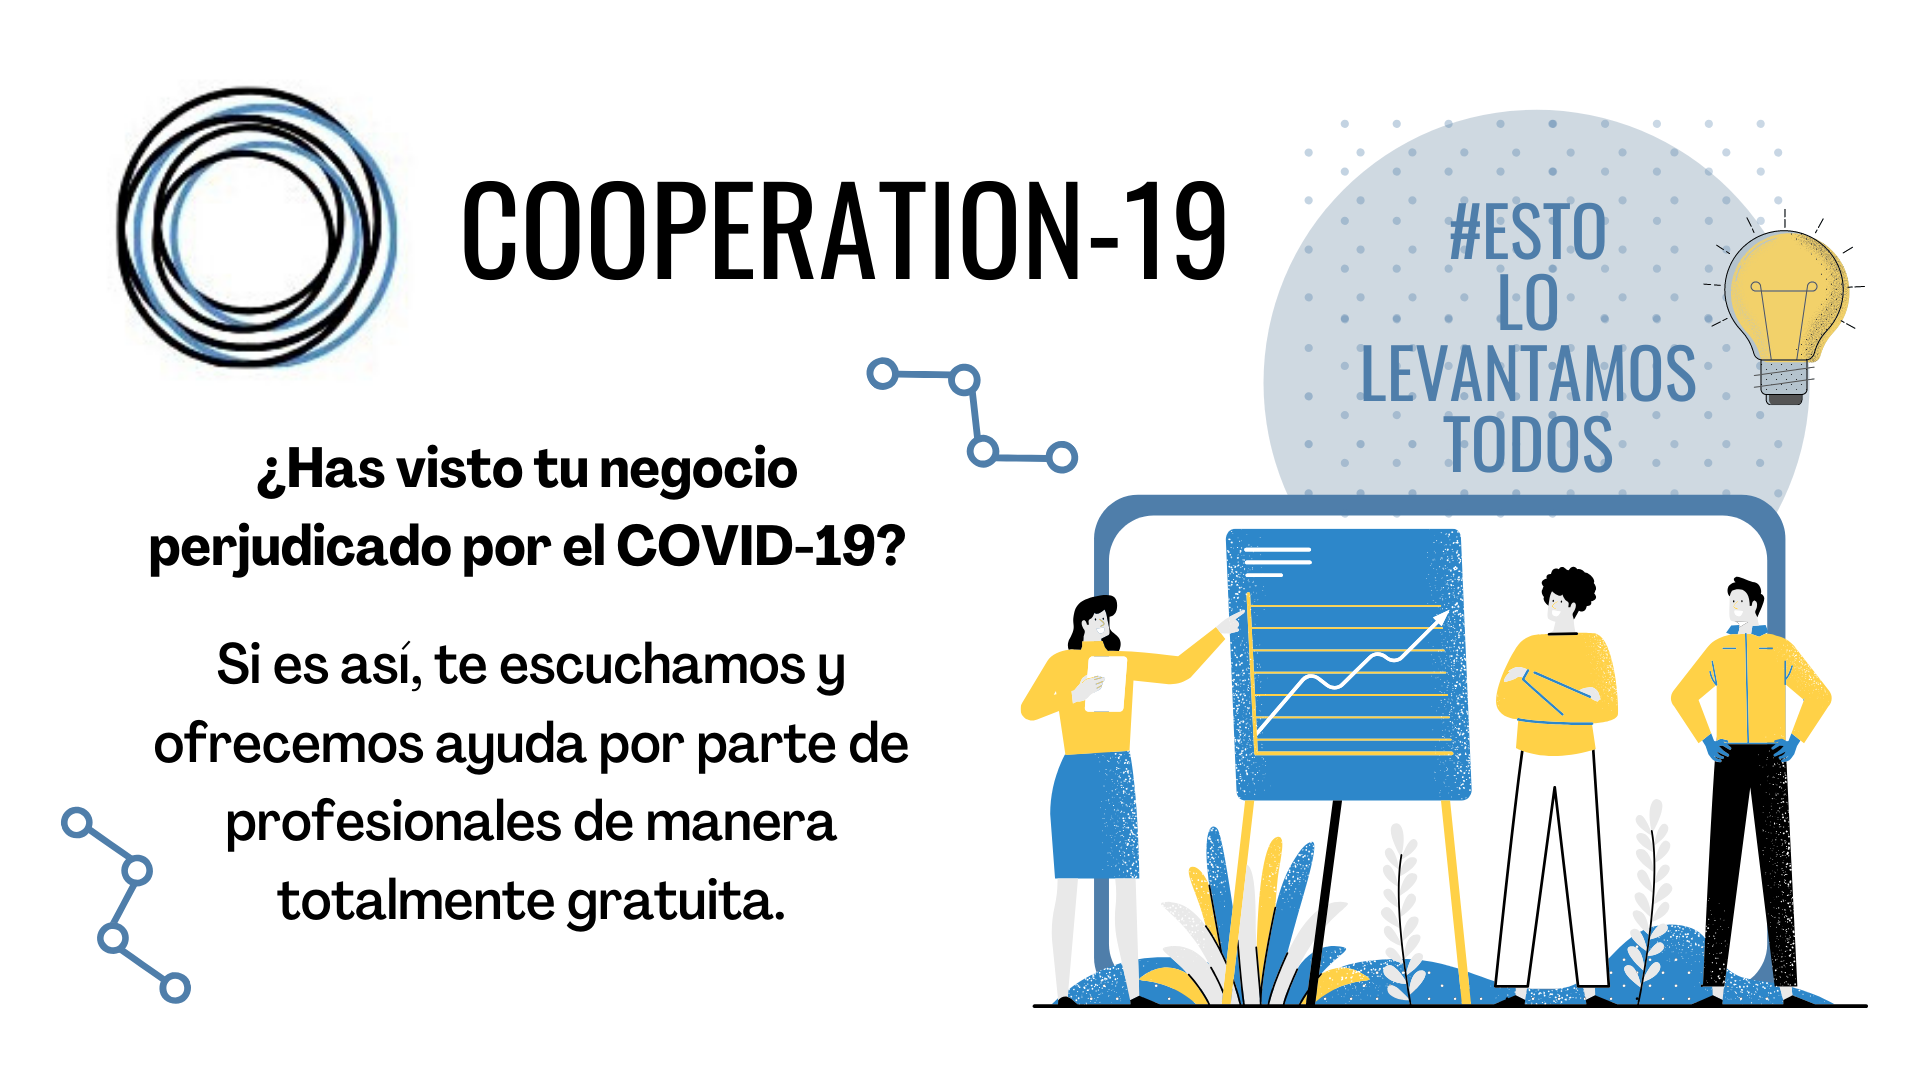 Cooperation-19